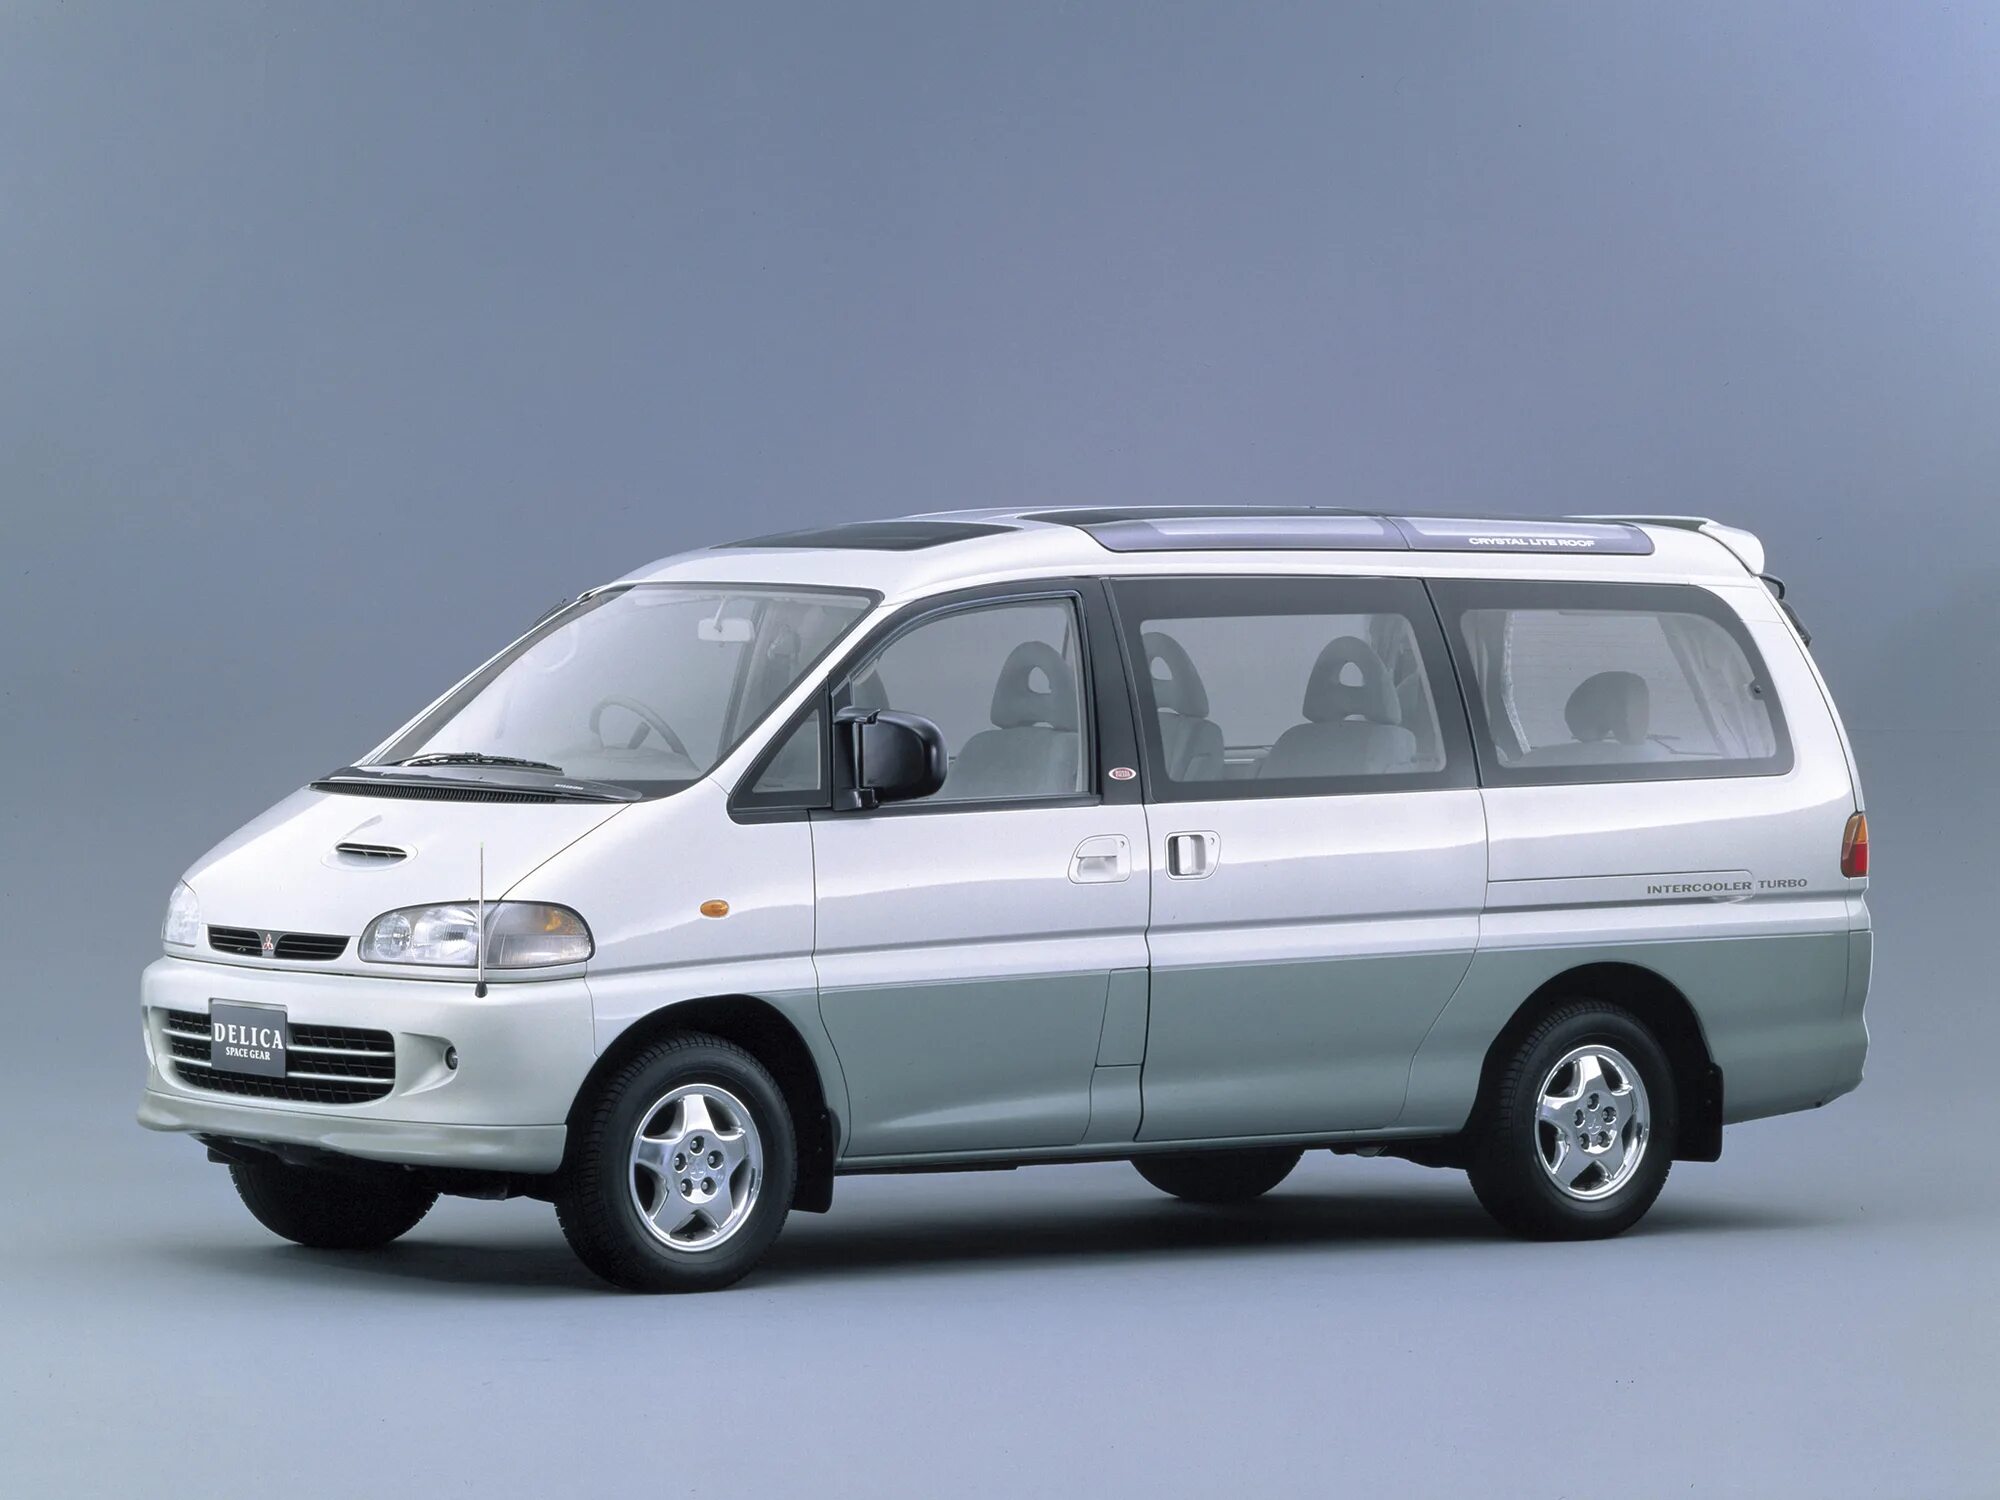 Mitsubishi Delica Space Gear. Мицубиси Делика 4 поколение. Mitsubishi Delica 1995 поколение минивэн. Мицубиси Делика Спейс Гир.